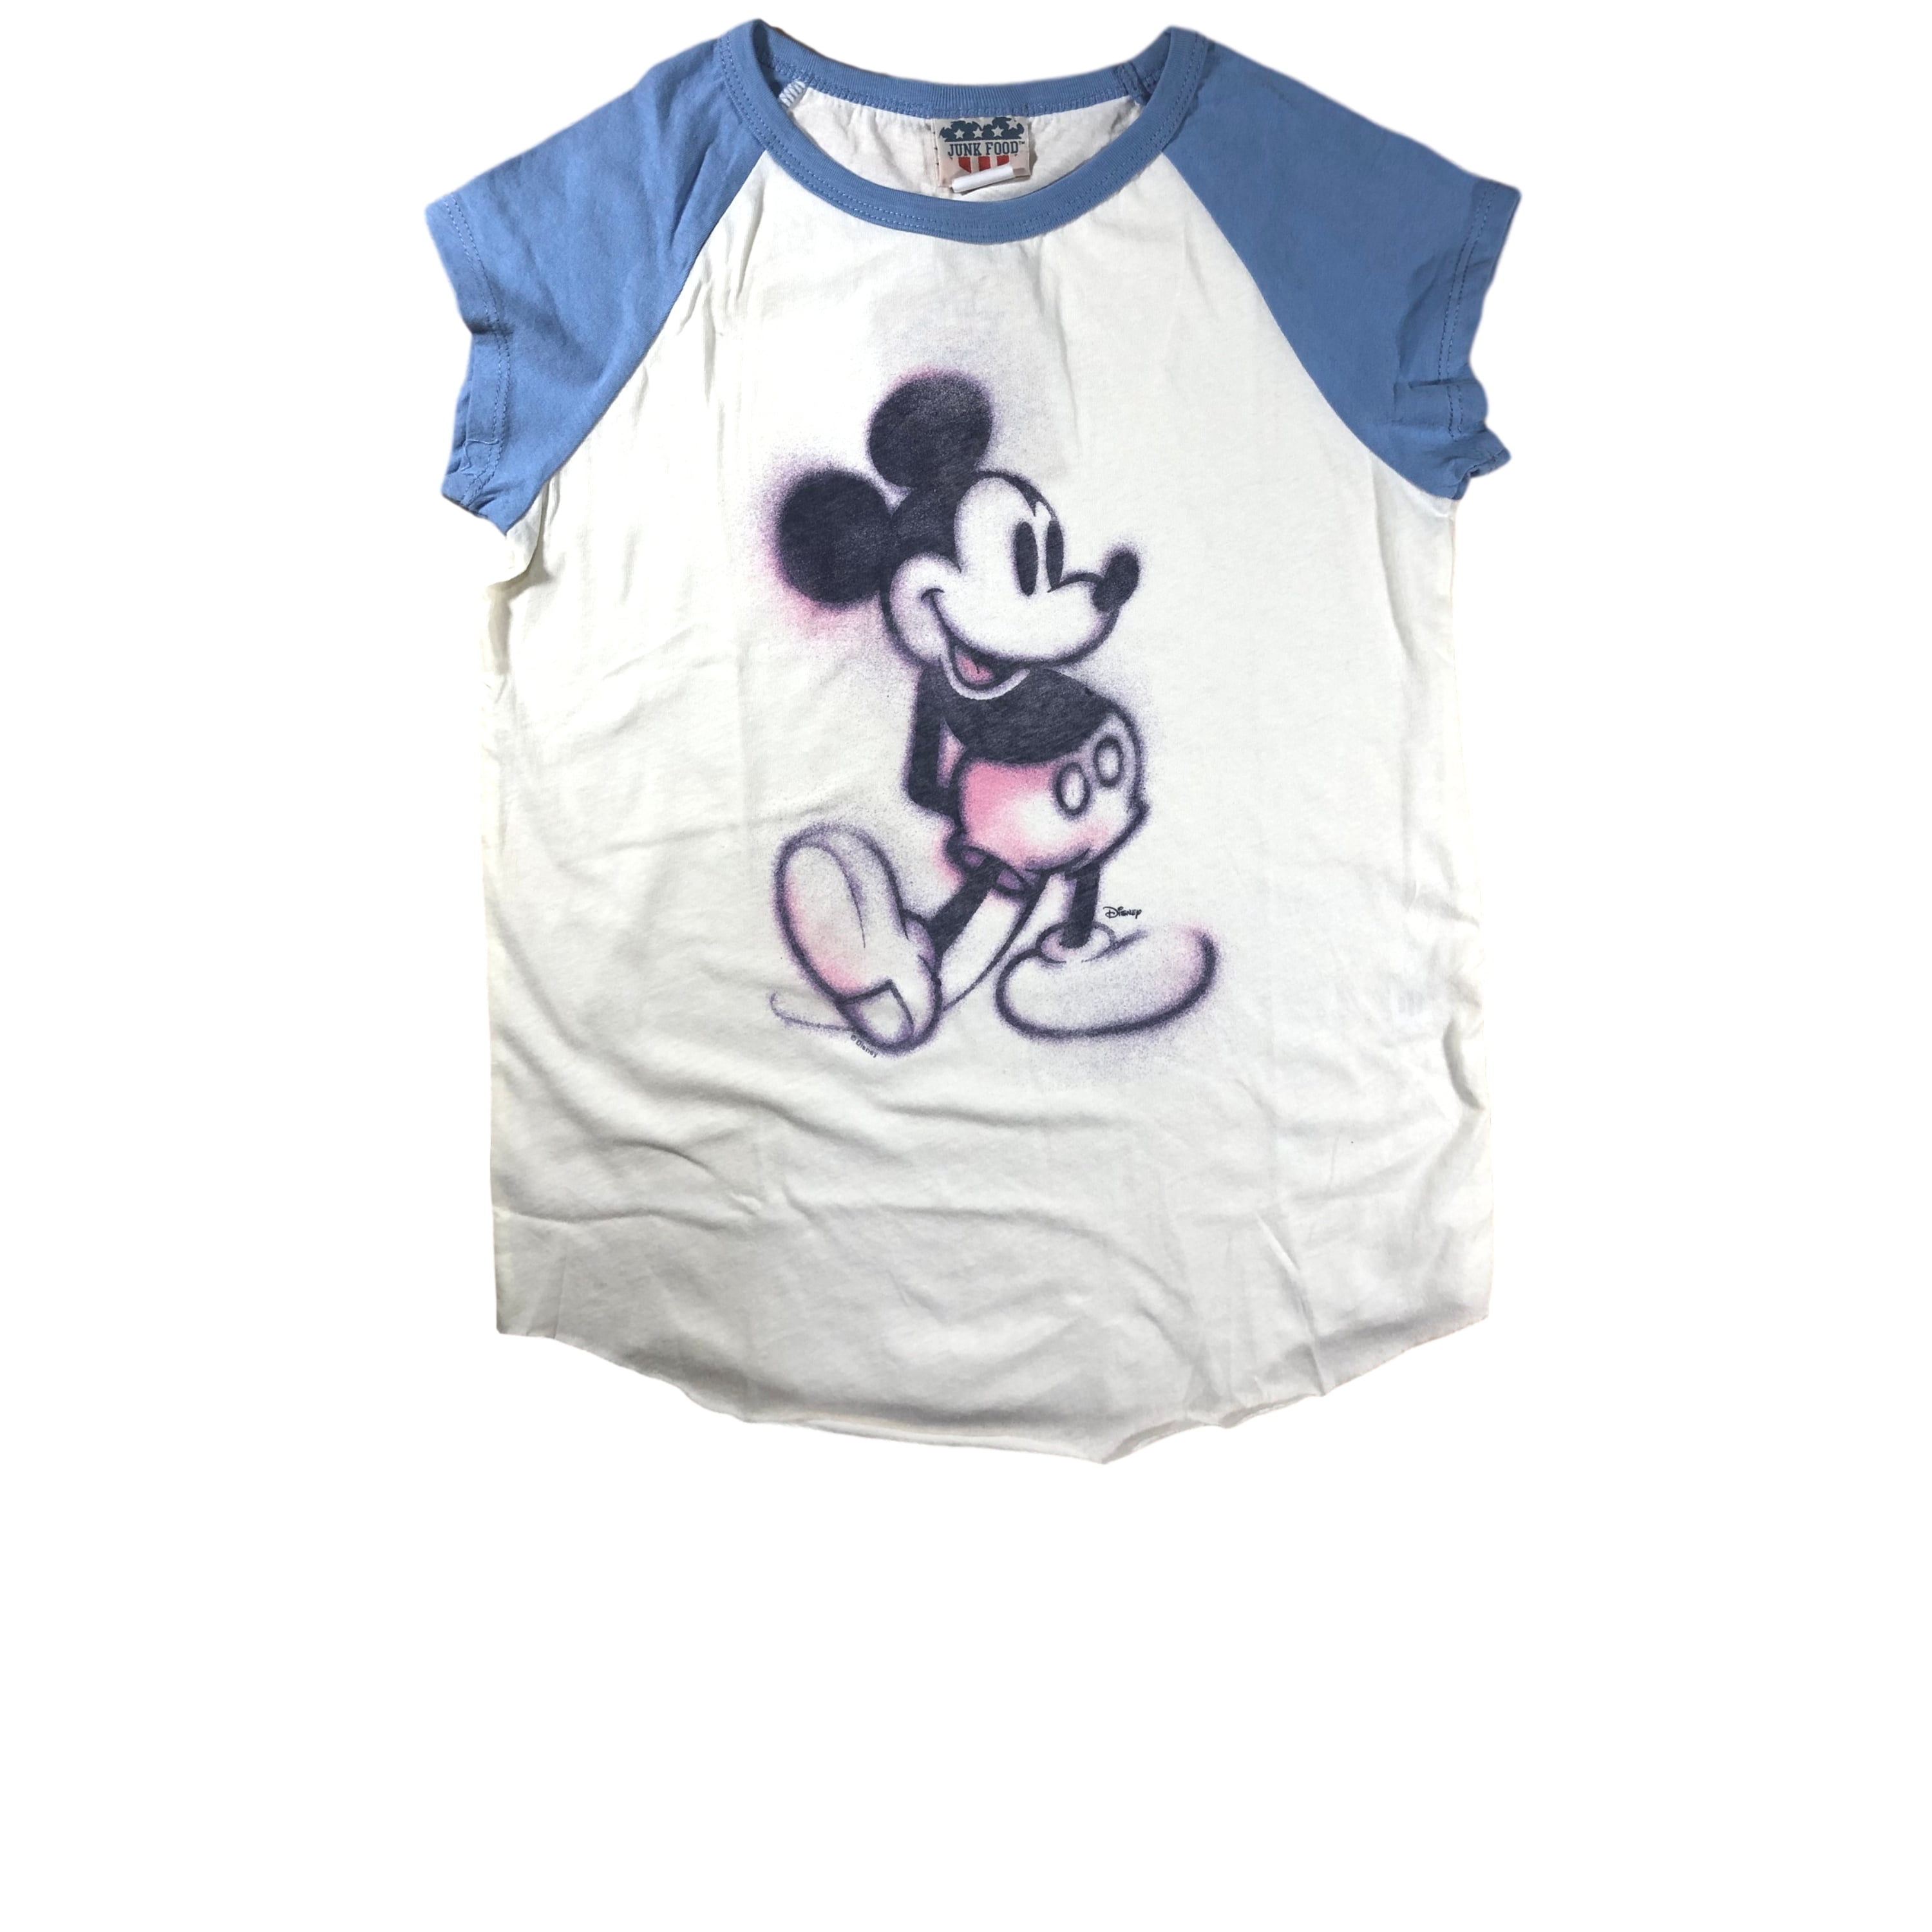 Disney Mickey Mouse Girl's Juniors short sleeve Tee top T-shirt - white &  blue - Walmart.com